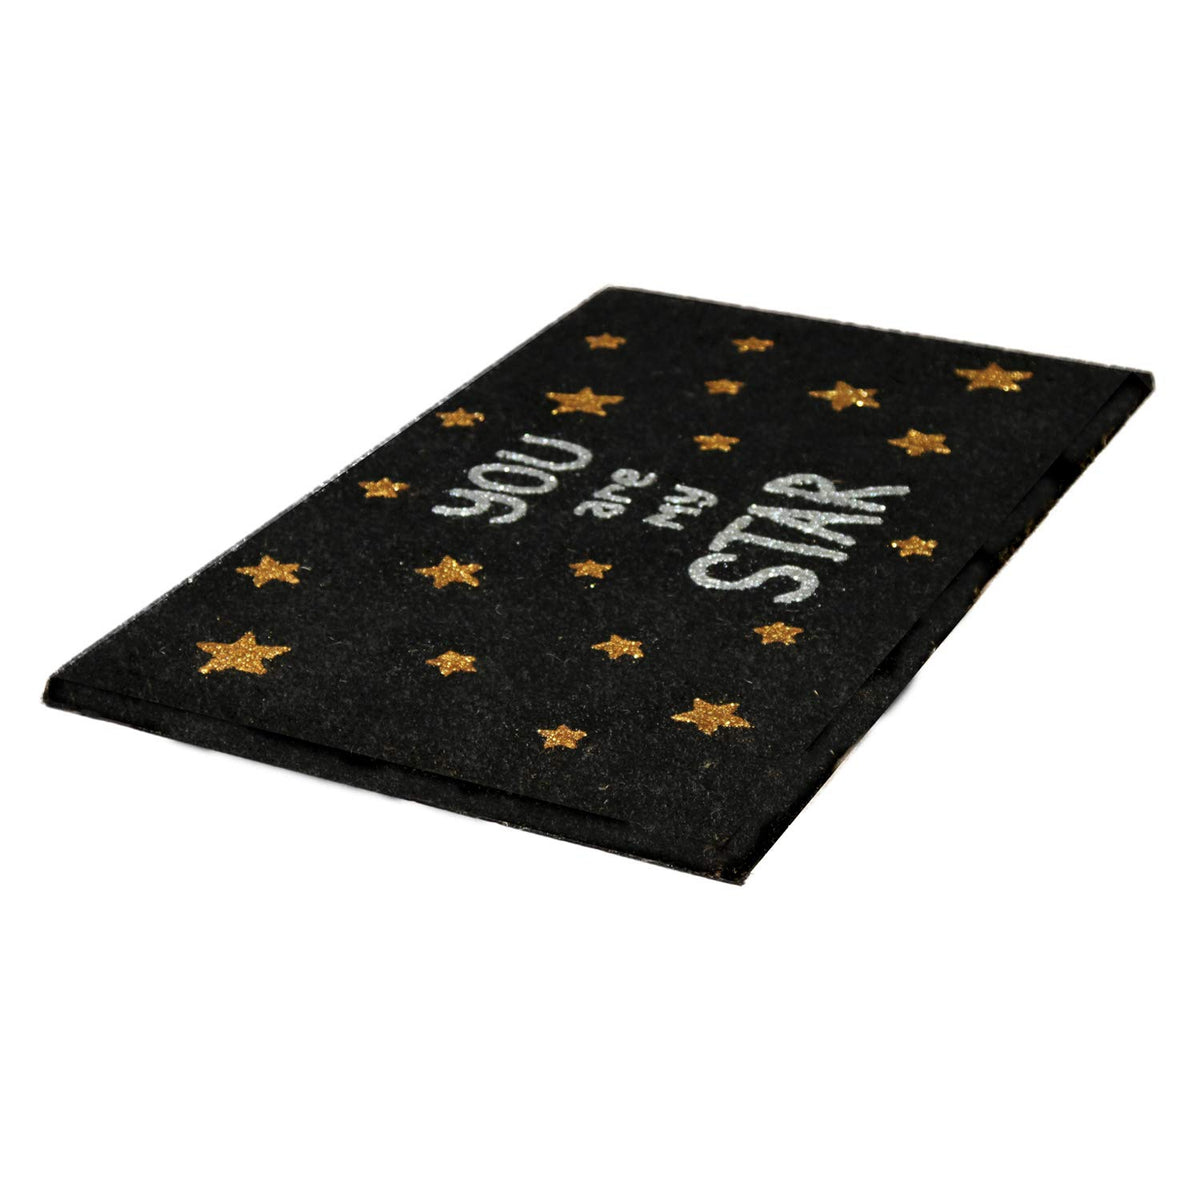 Stylish Black Glitter Printed 'You are My Star' Natural Coir Floor Mat - OnlyMat